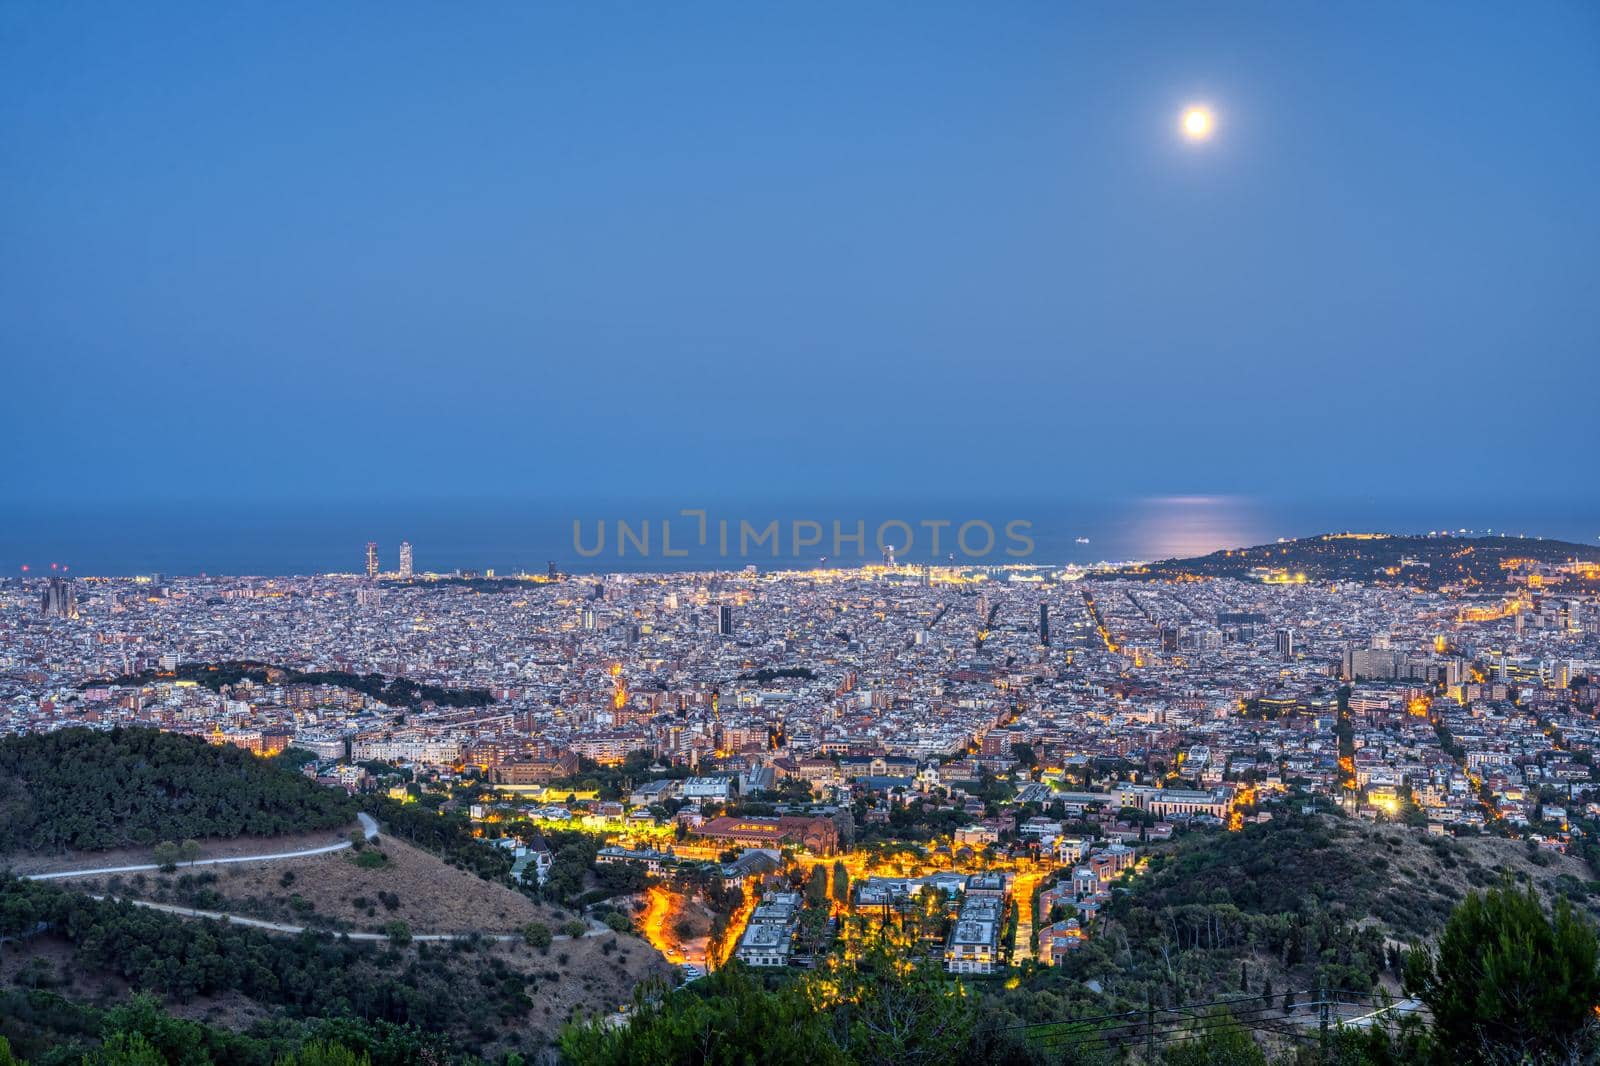 Night view of Barcelona by elxeneize